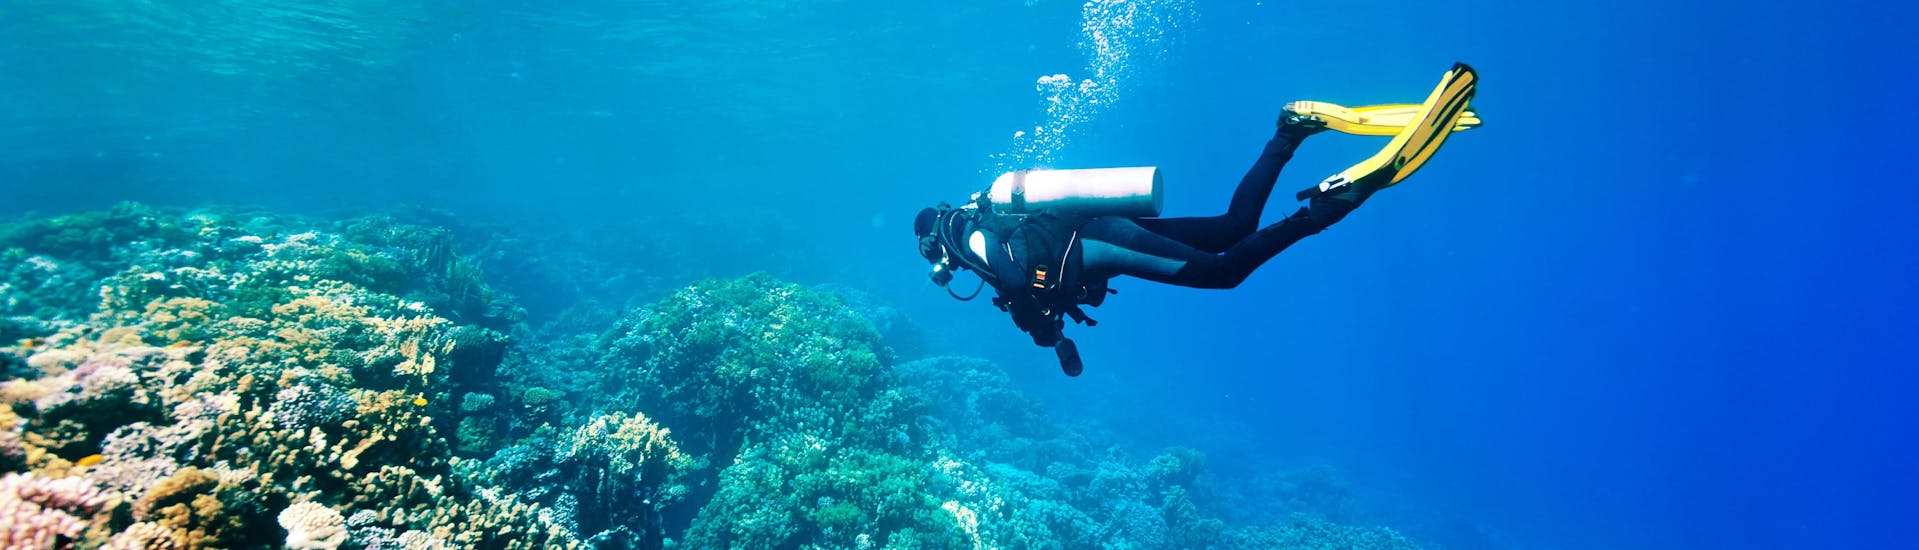 A scuba diver is exploring a reef while scuba diving in the scuba diving destination of Attica.